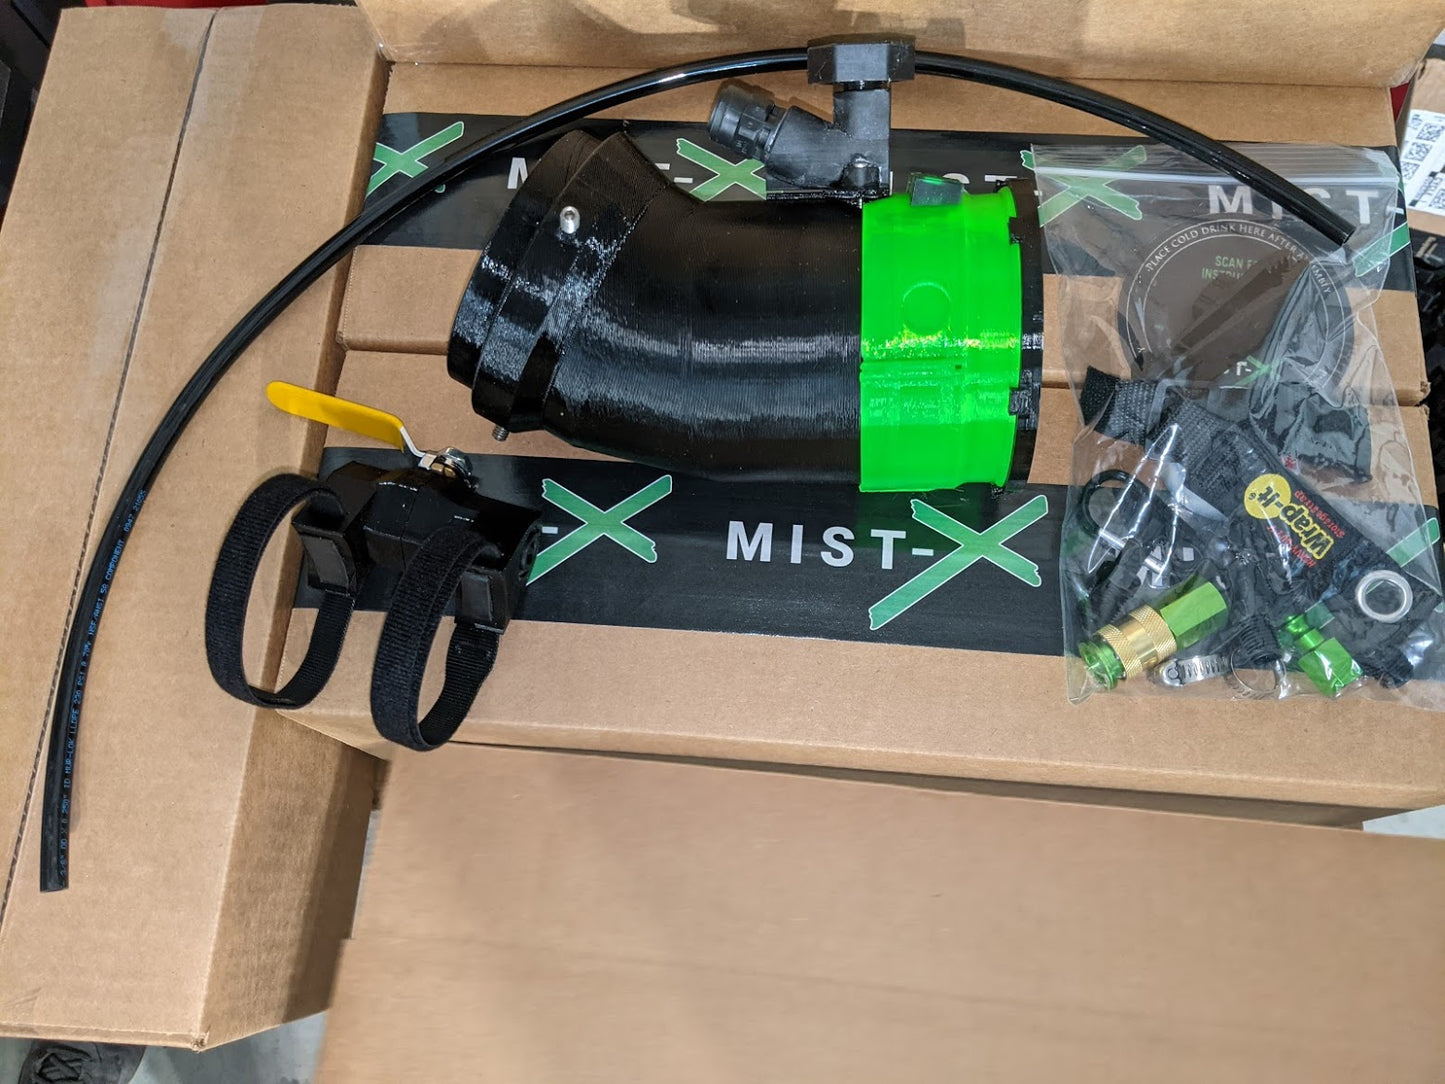 Mist-X DIY adapter